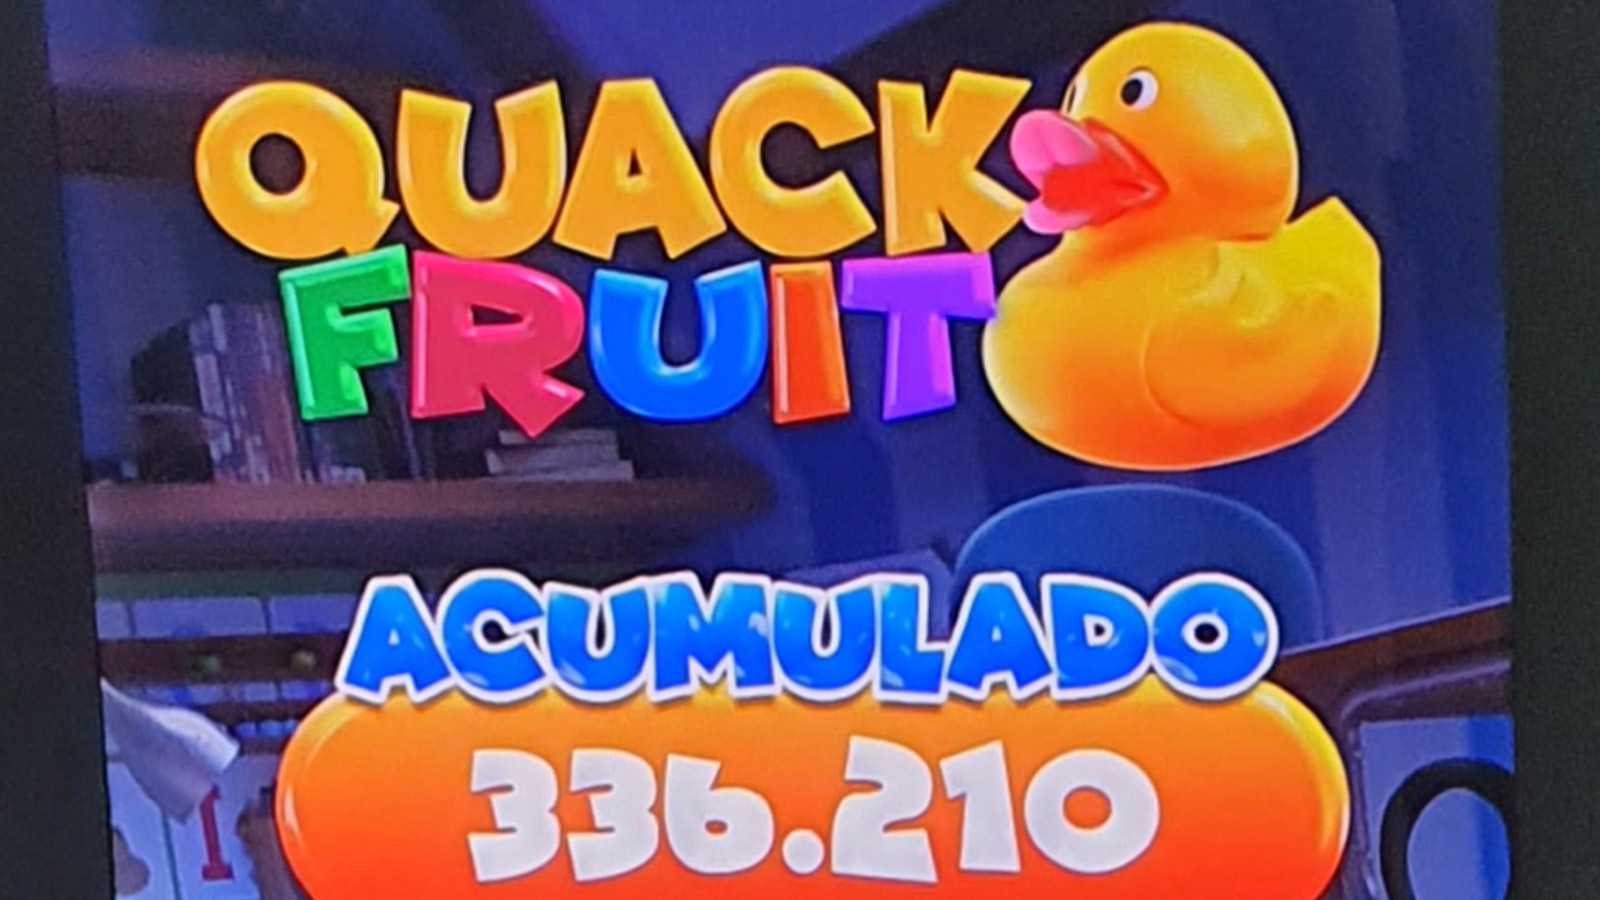 juegos-friendly-quack-fruit-1